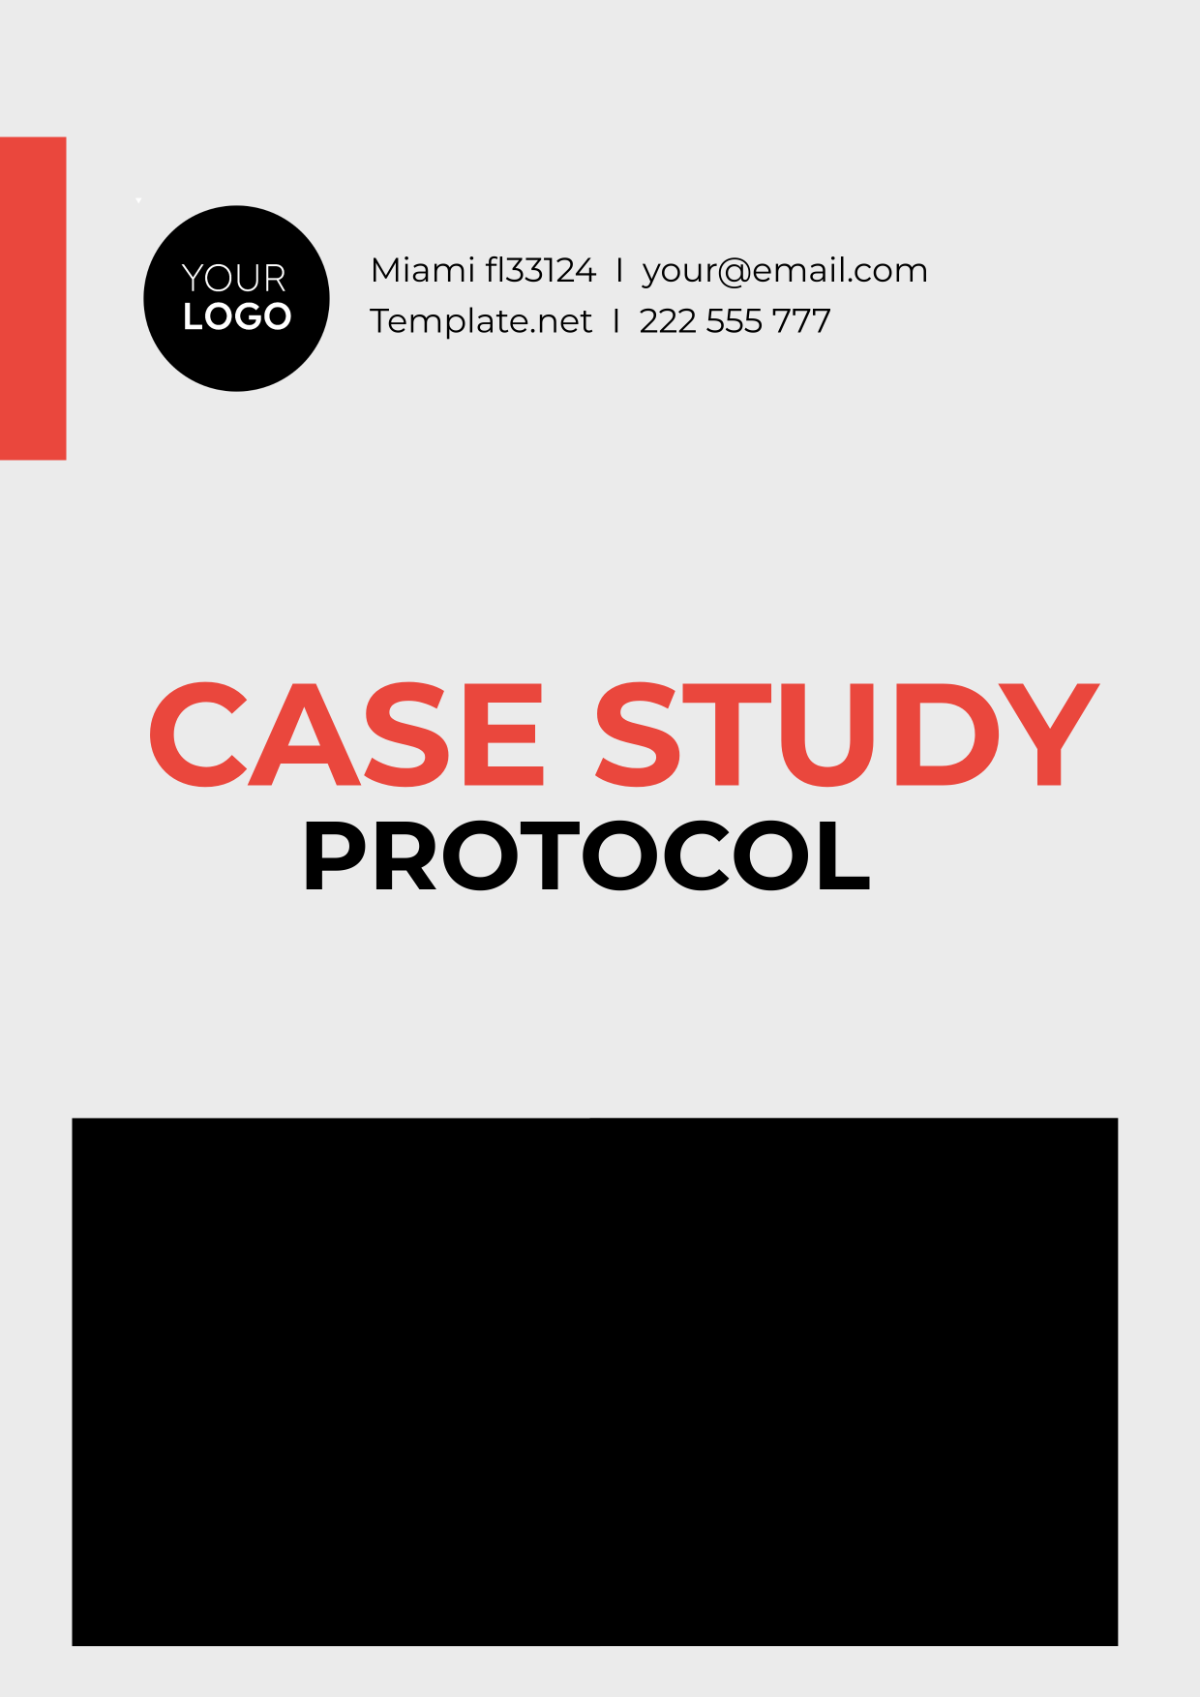 Case Study Protocol Template